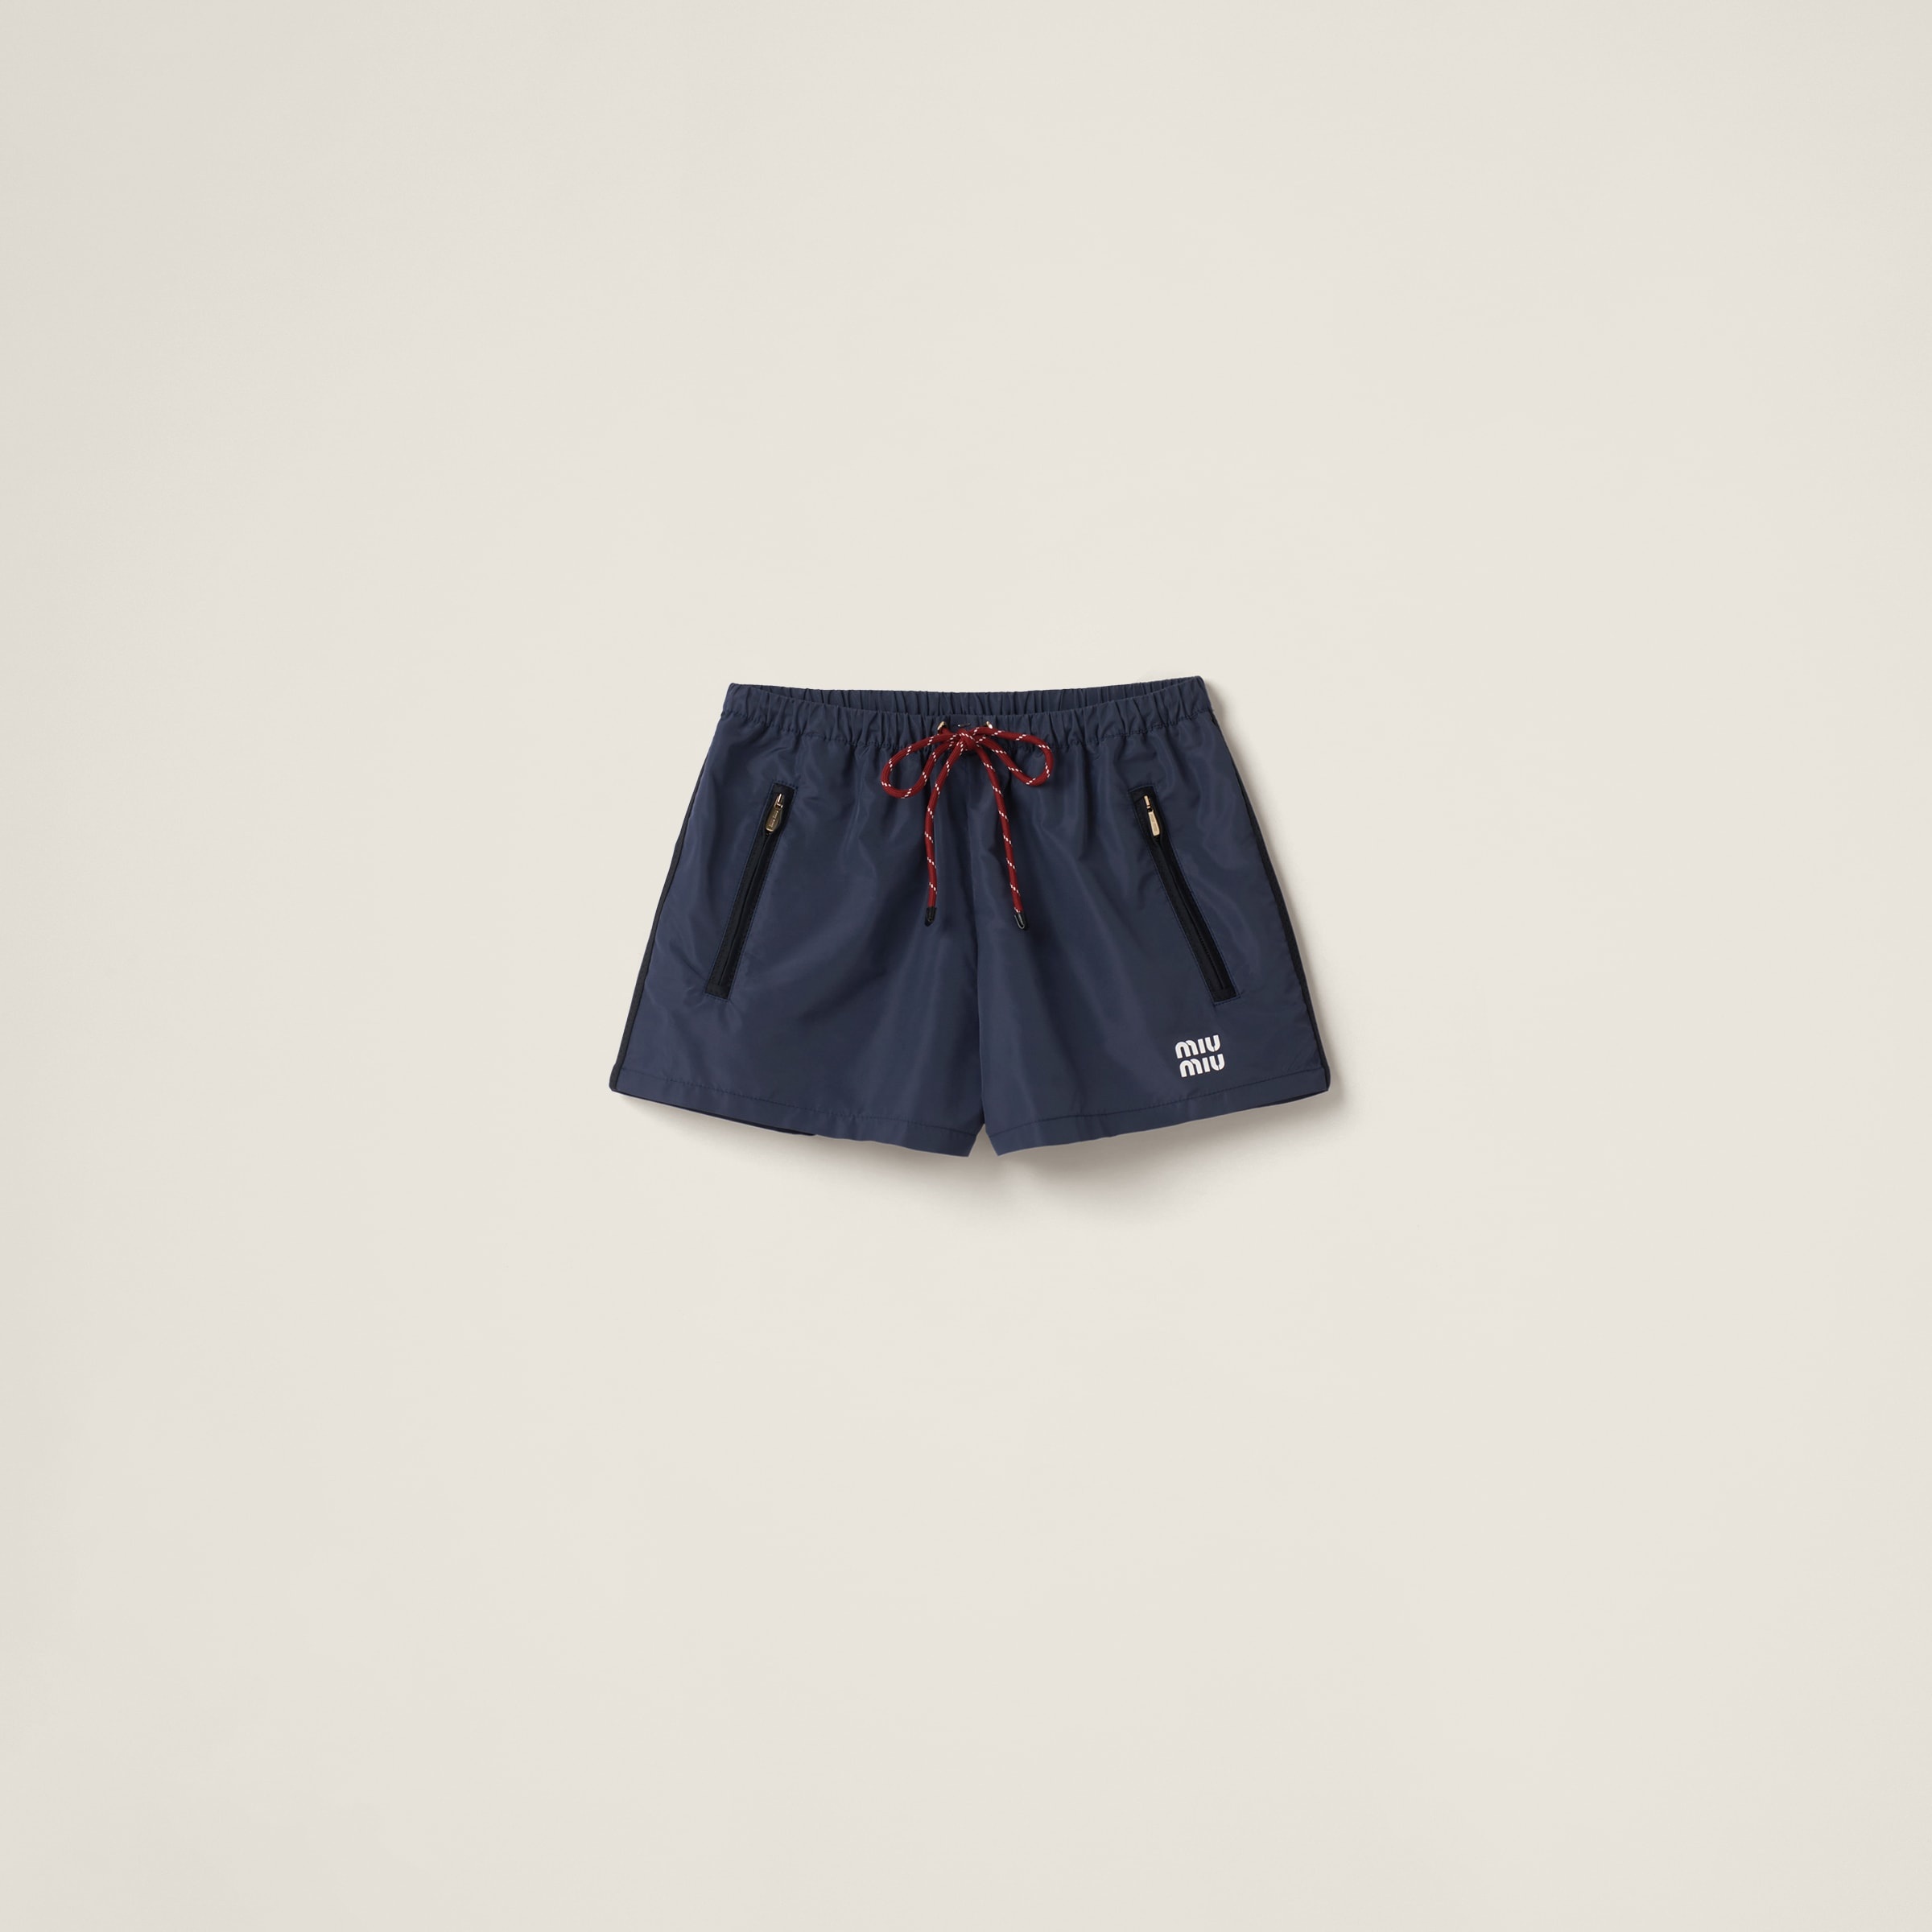 Technical fabric shorts - 1